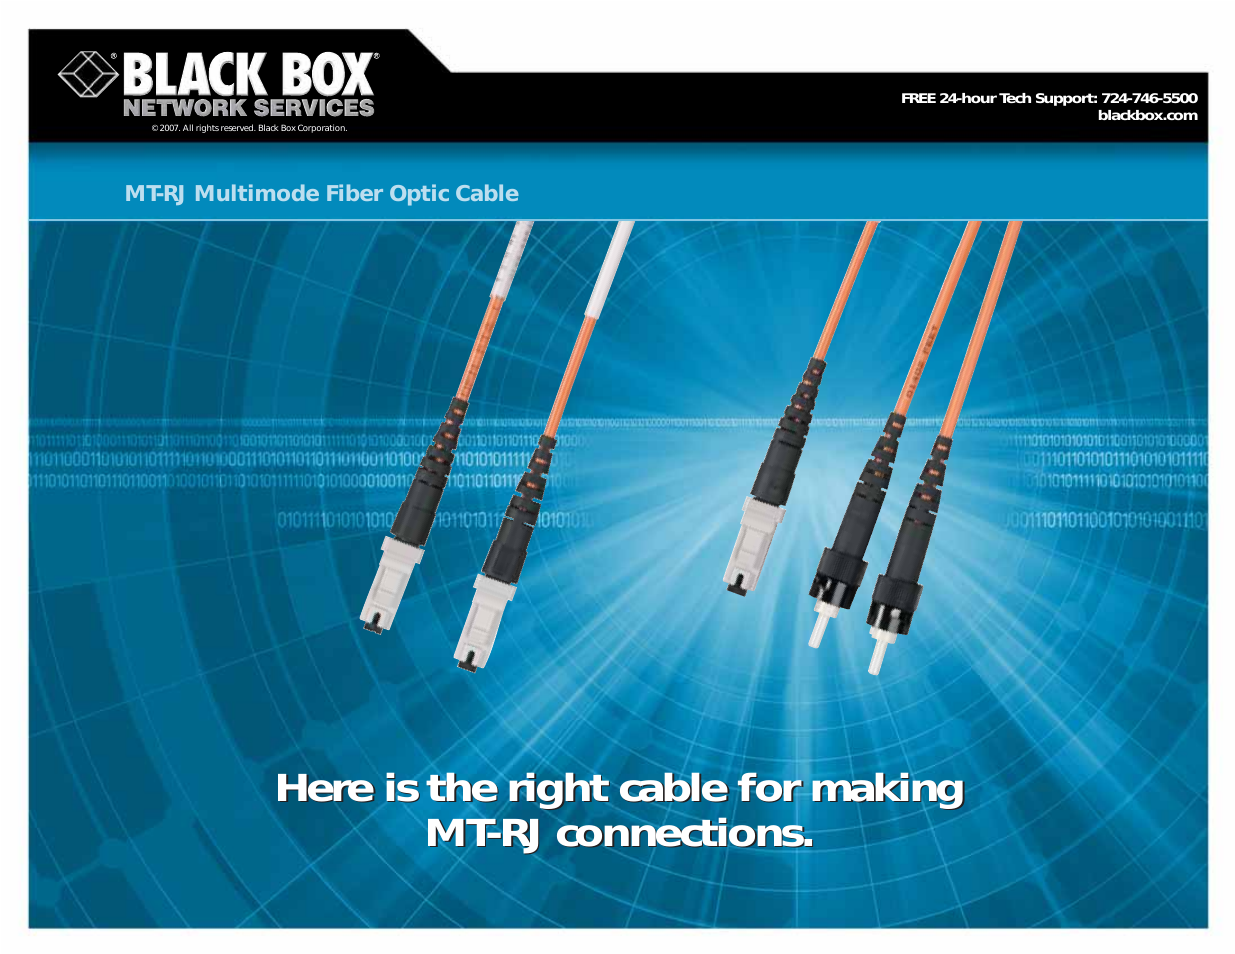 MT-RJ Multimode Fiber Optic Cable